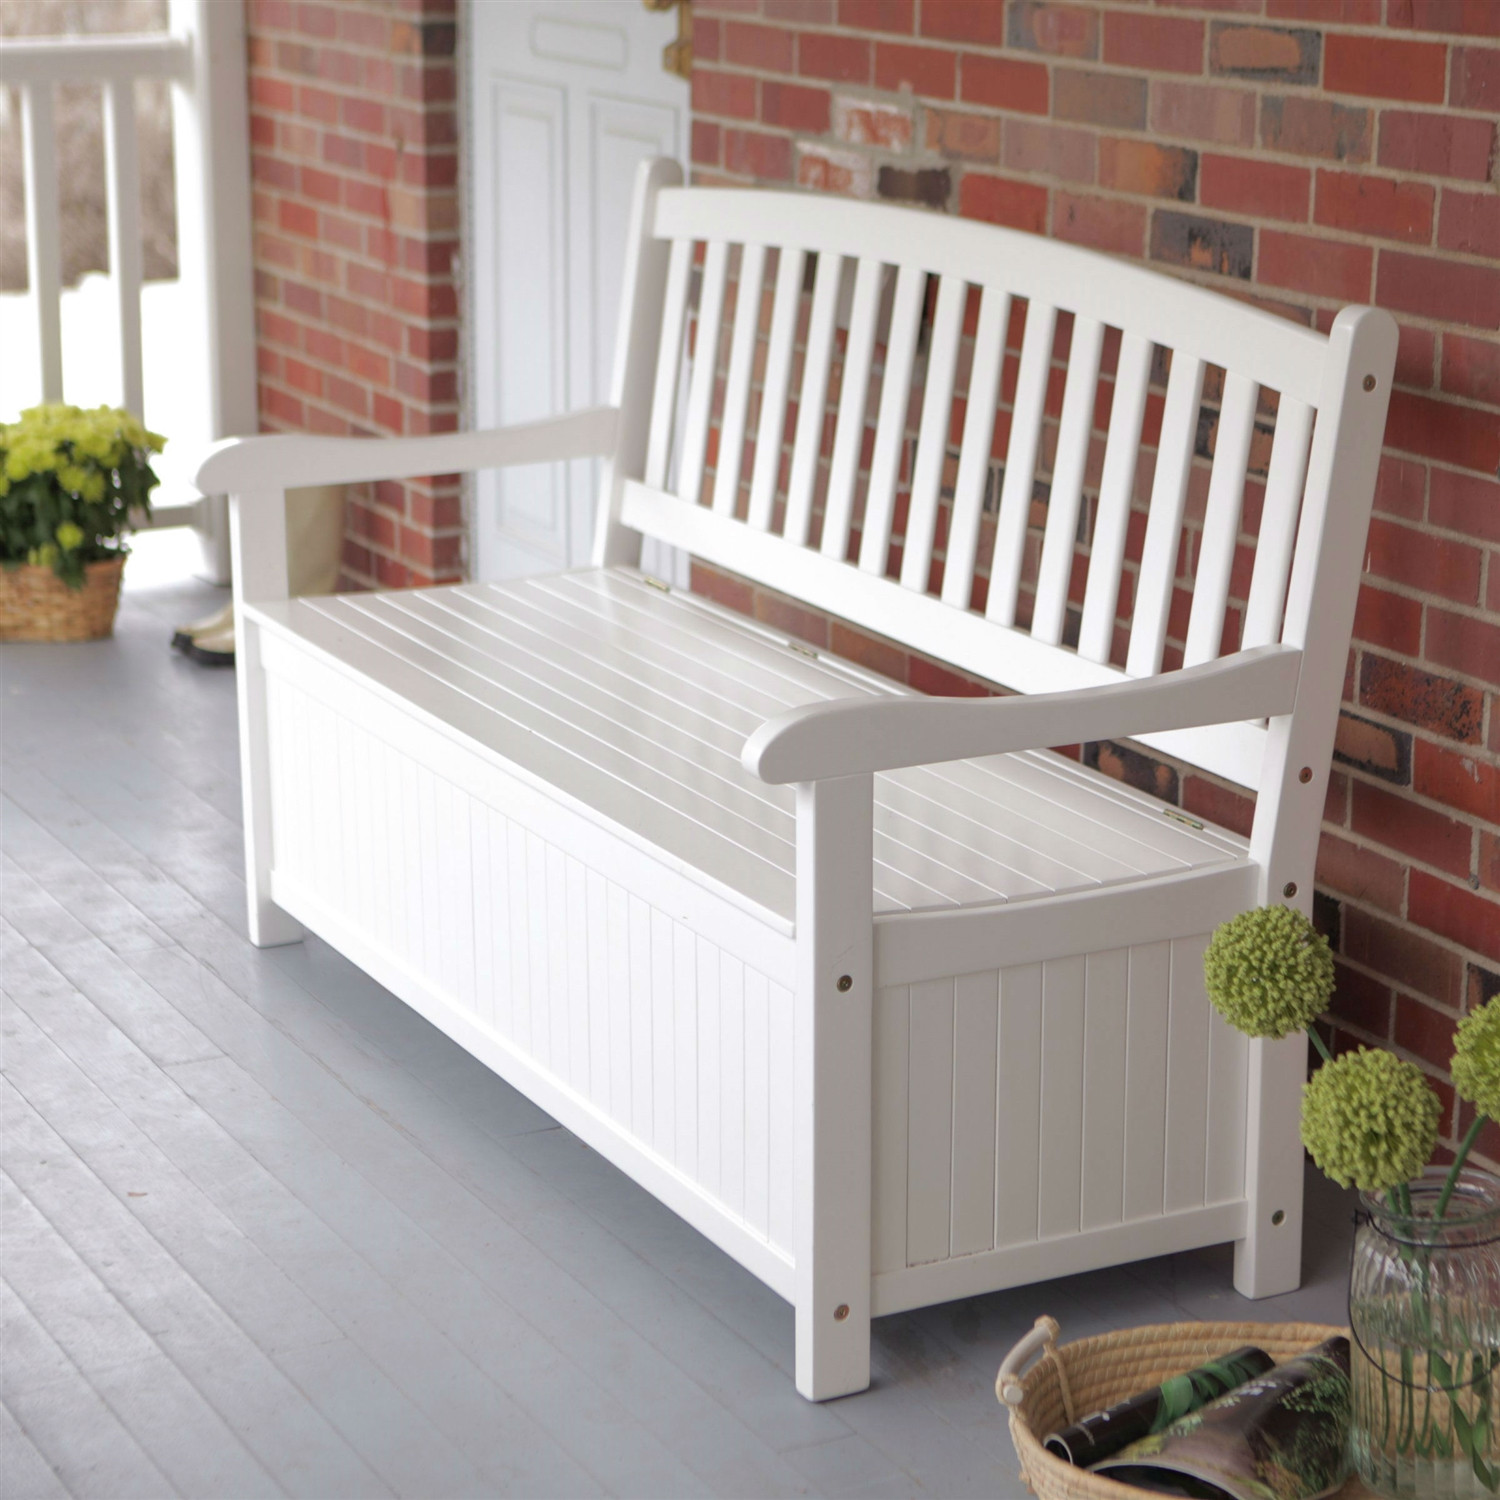 Storage Bench Deck Box
 White Wood 4 Ft Outdoor Patio Garden Bench Deck Box with